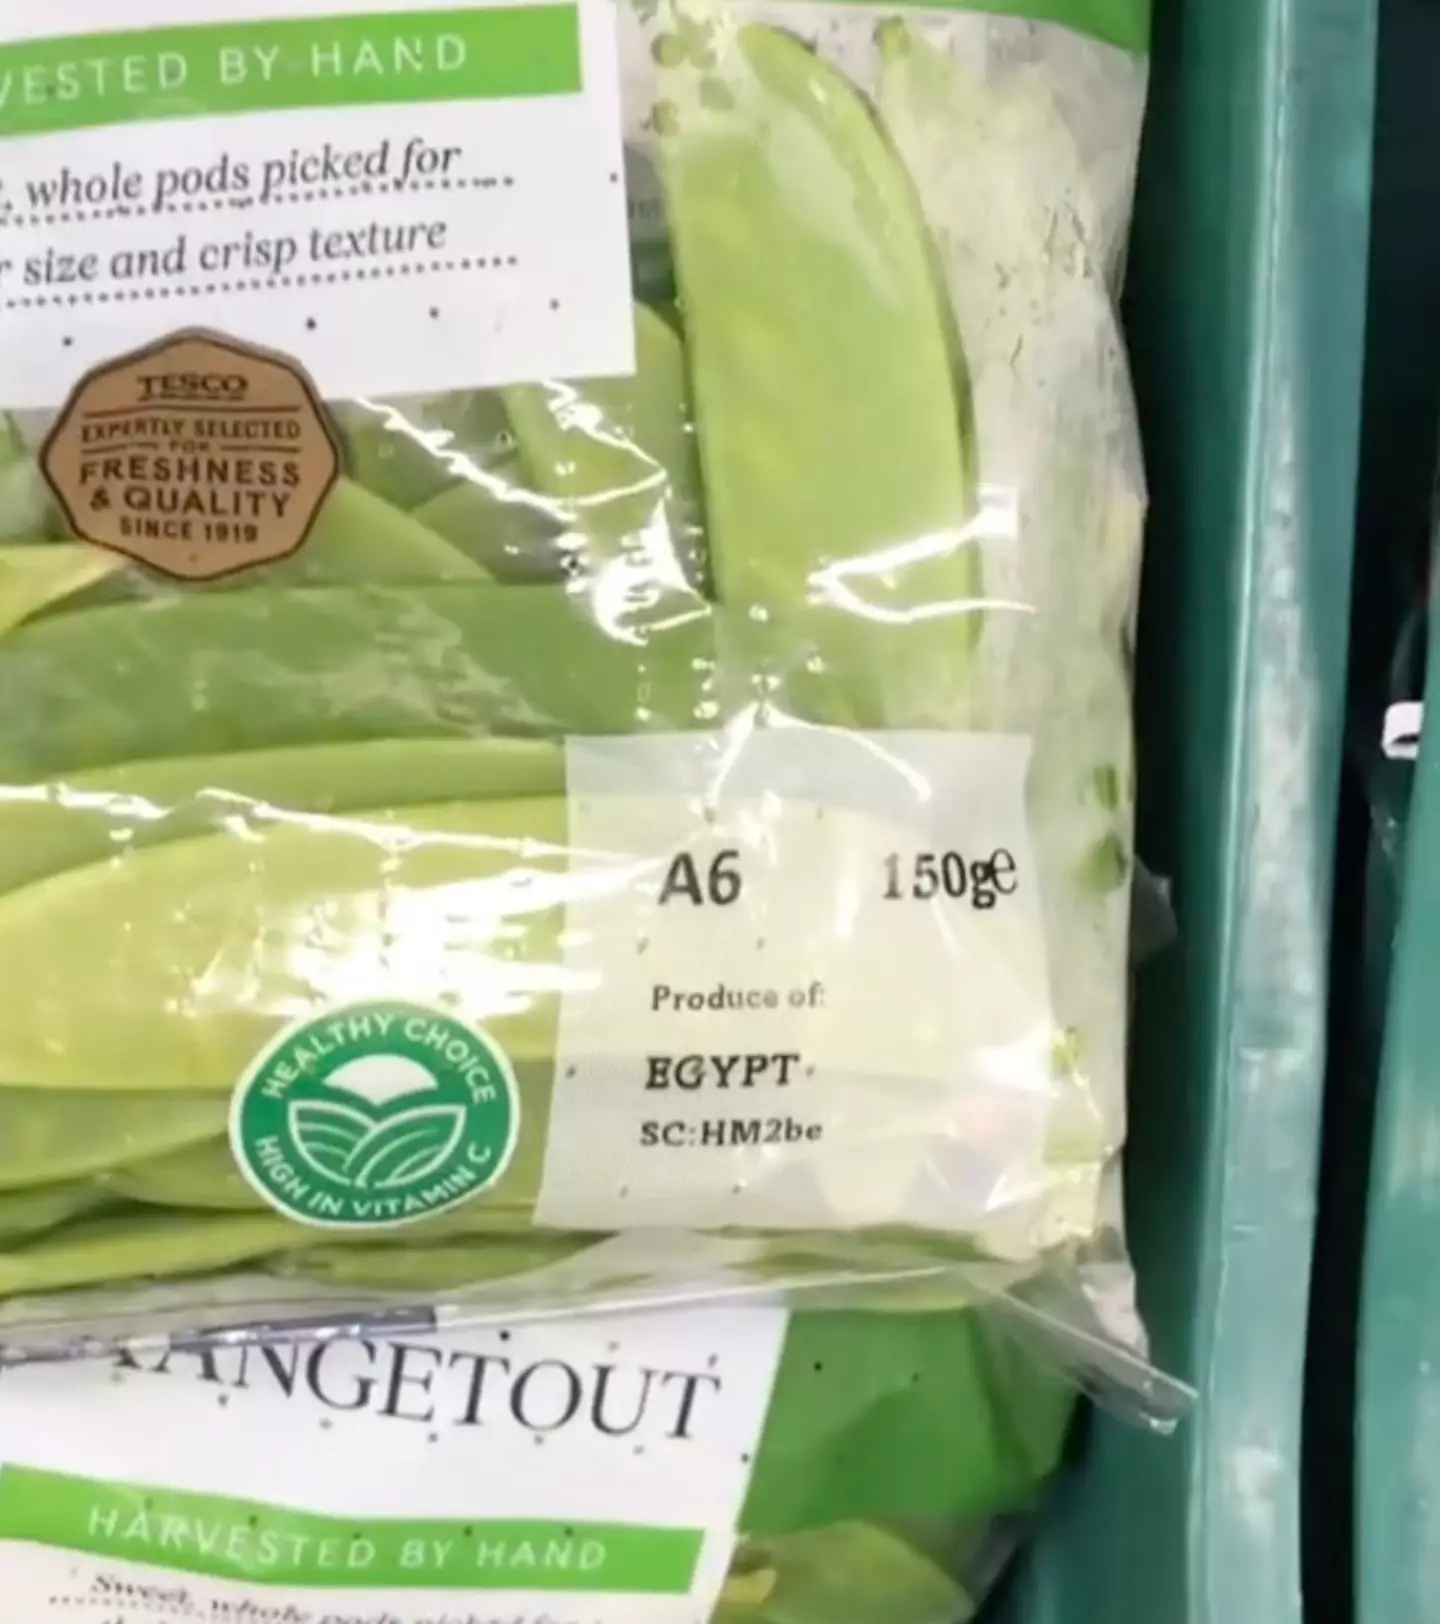 Former Tesco worker shares 'secret code' meanings on bags of vegetables -  Edinburgh Live